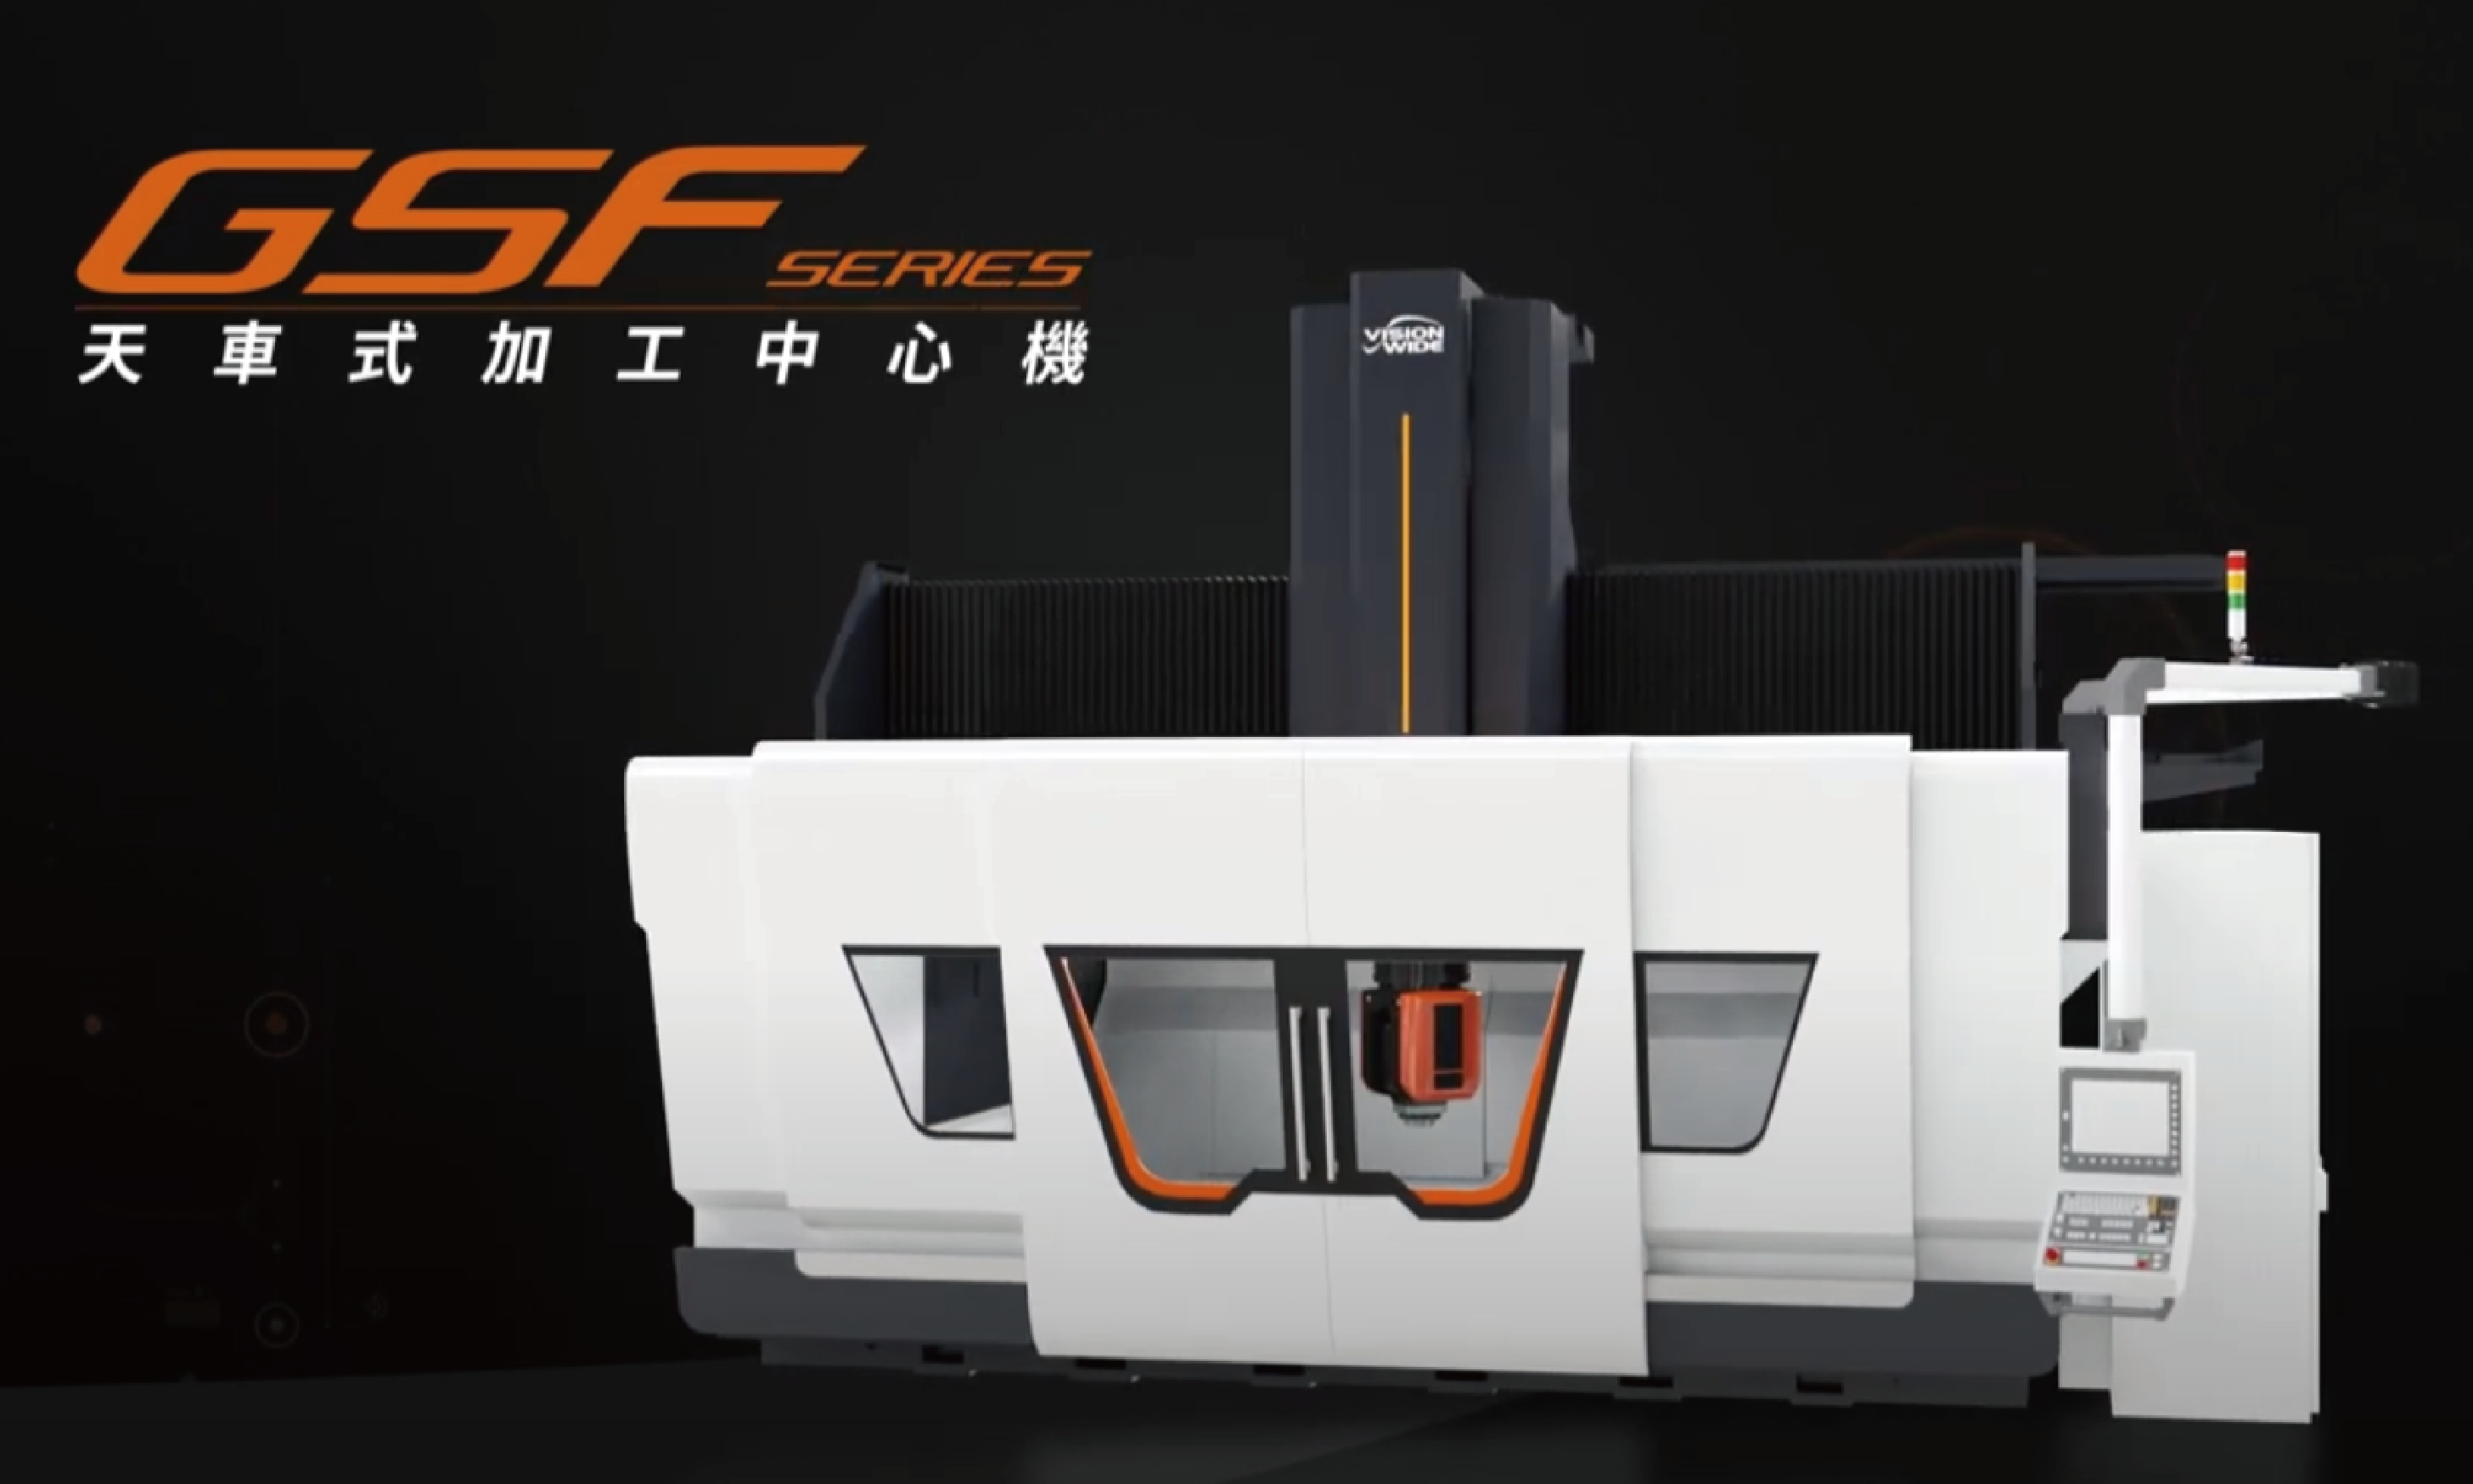 GSF-5-axis Gantry Type Machining Center 天車型五軸加工中心機